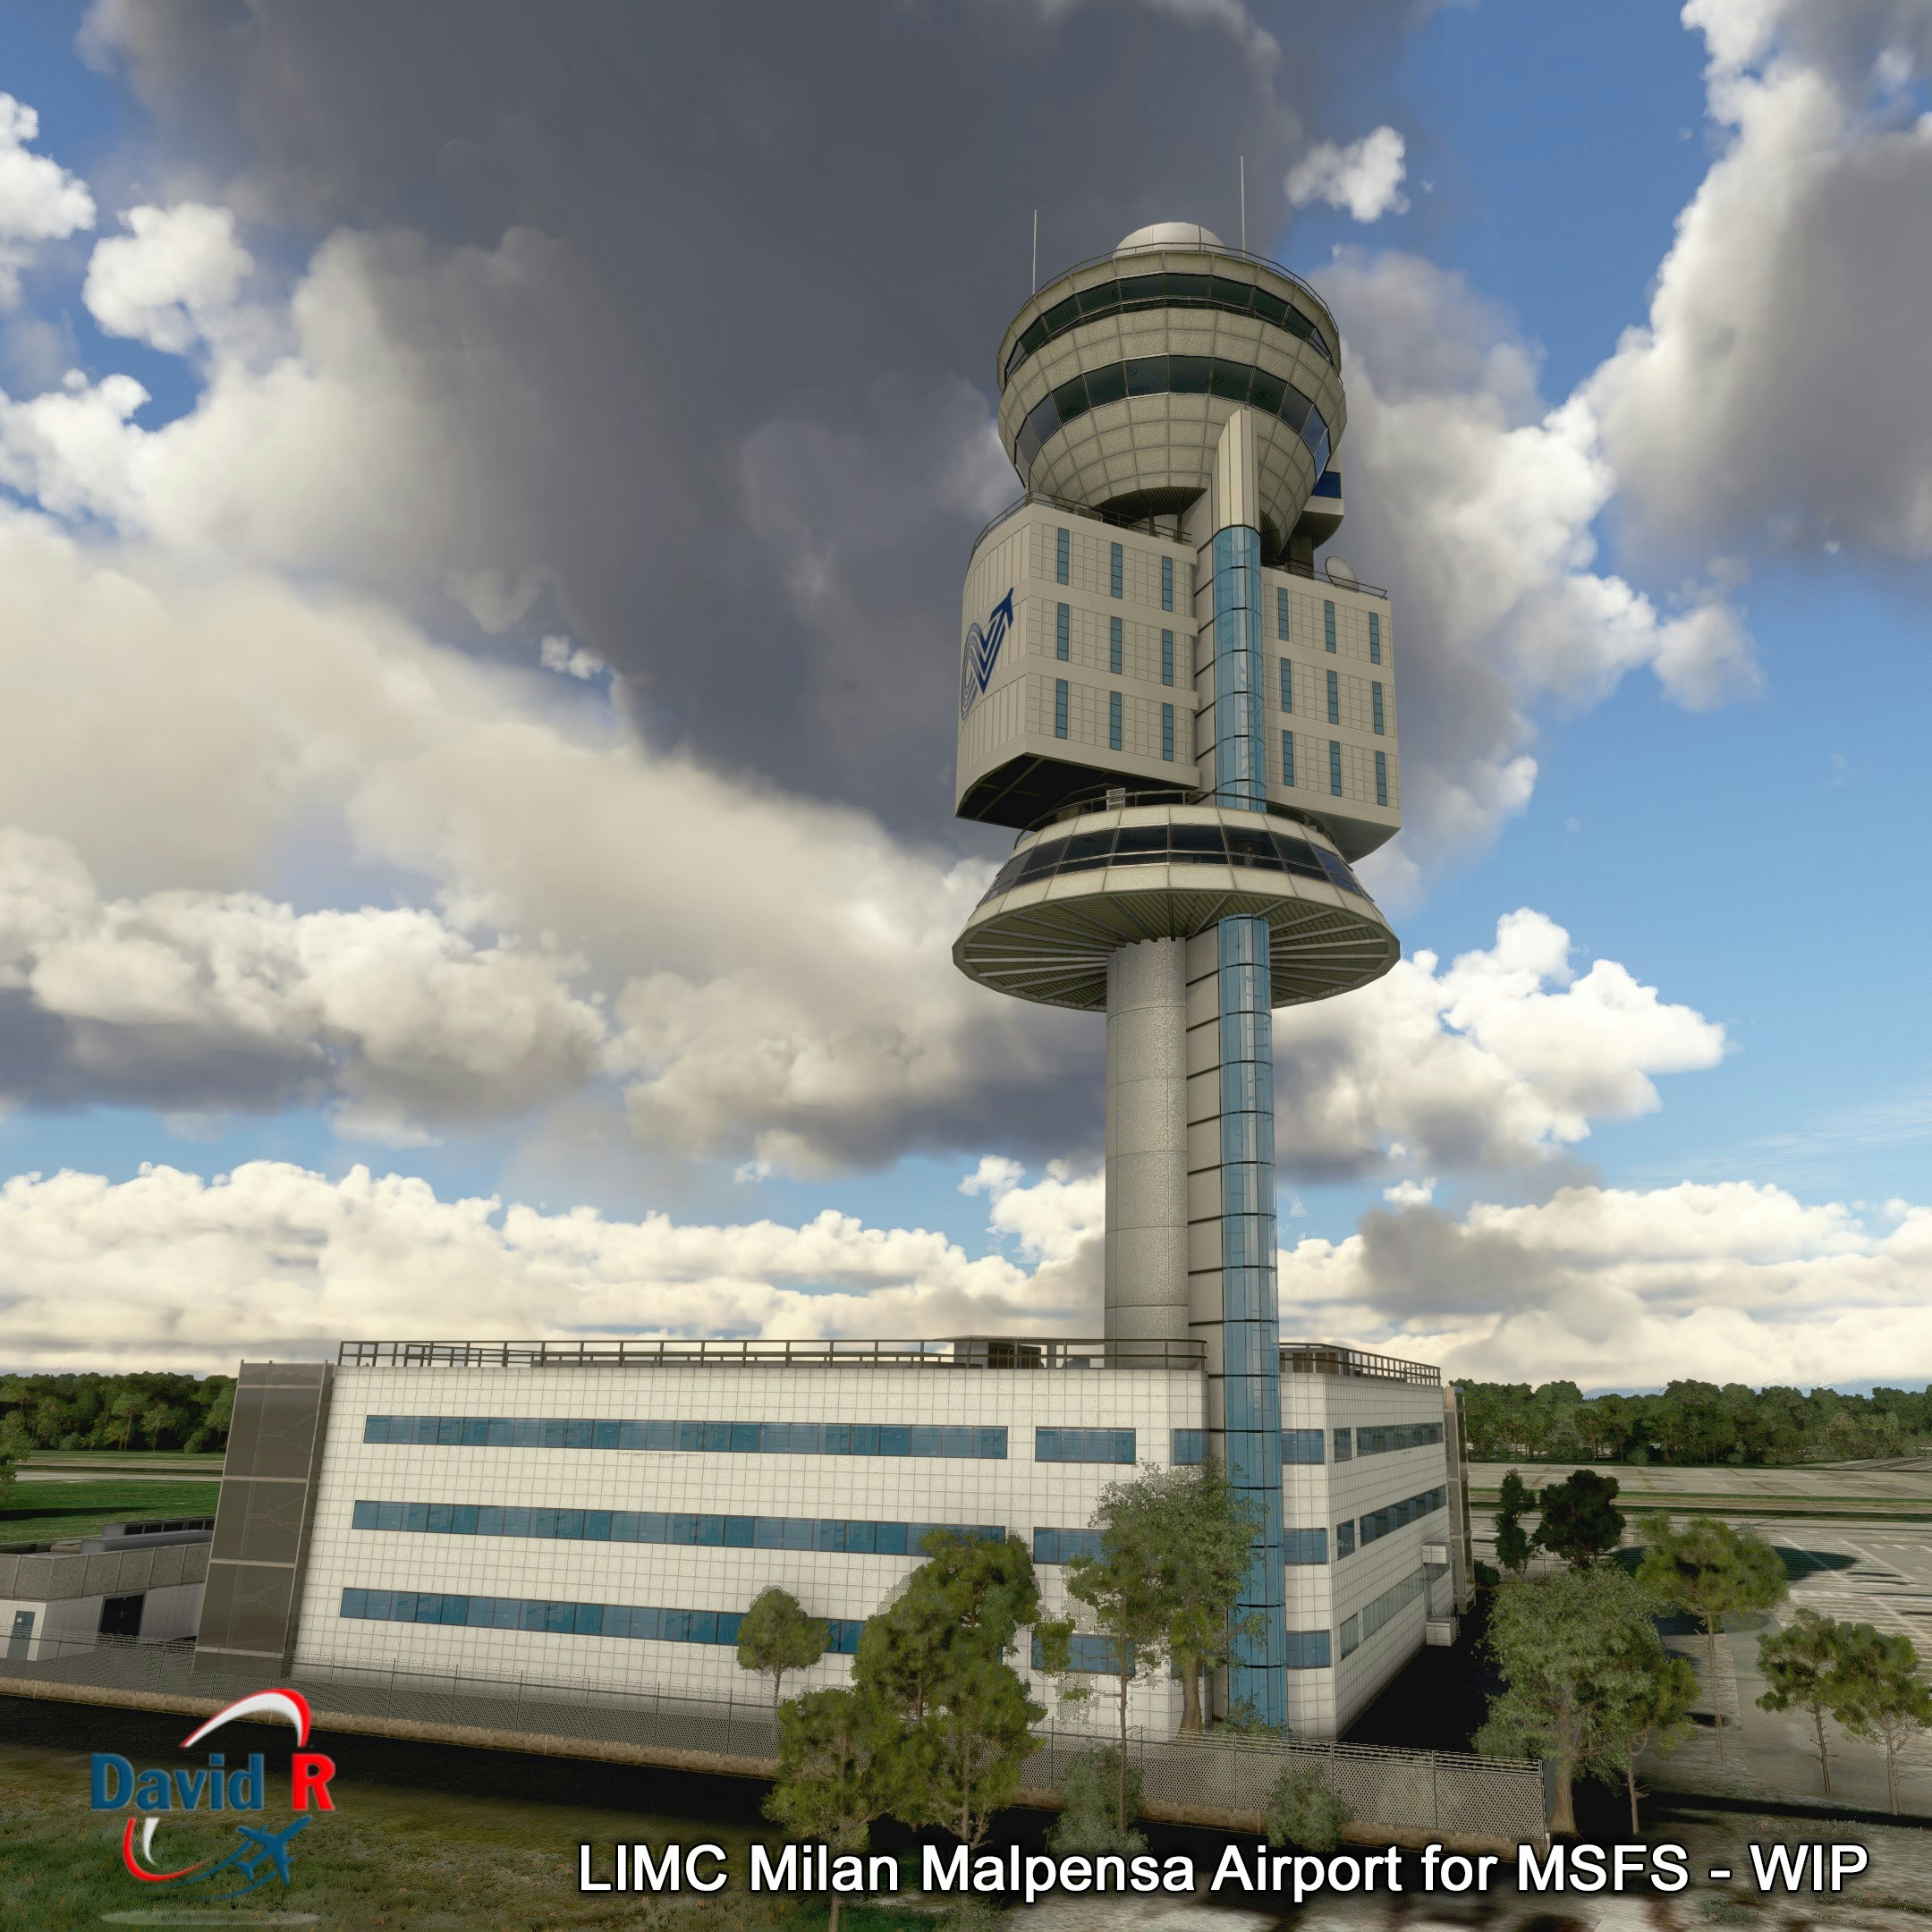 Aerosoft previews Mega Airport Milan Malpensa for MSFS